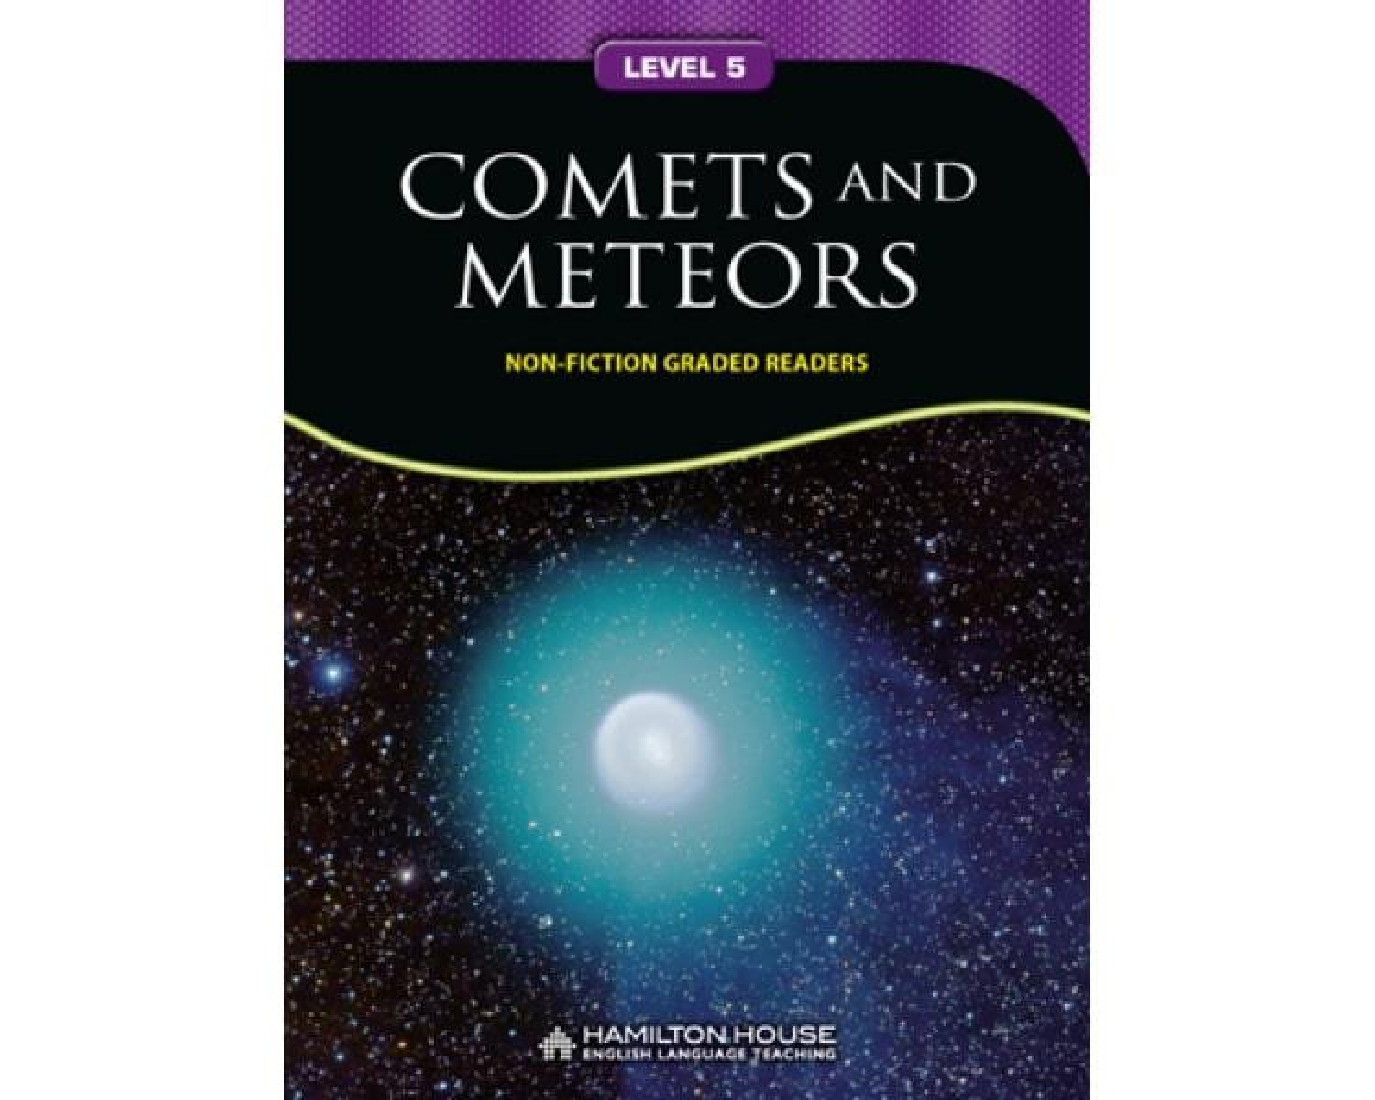 NFGR 5: COMETS AND METEORS